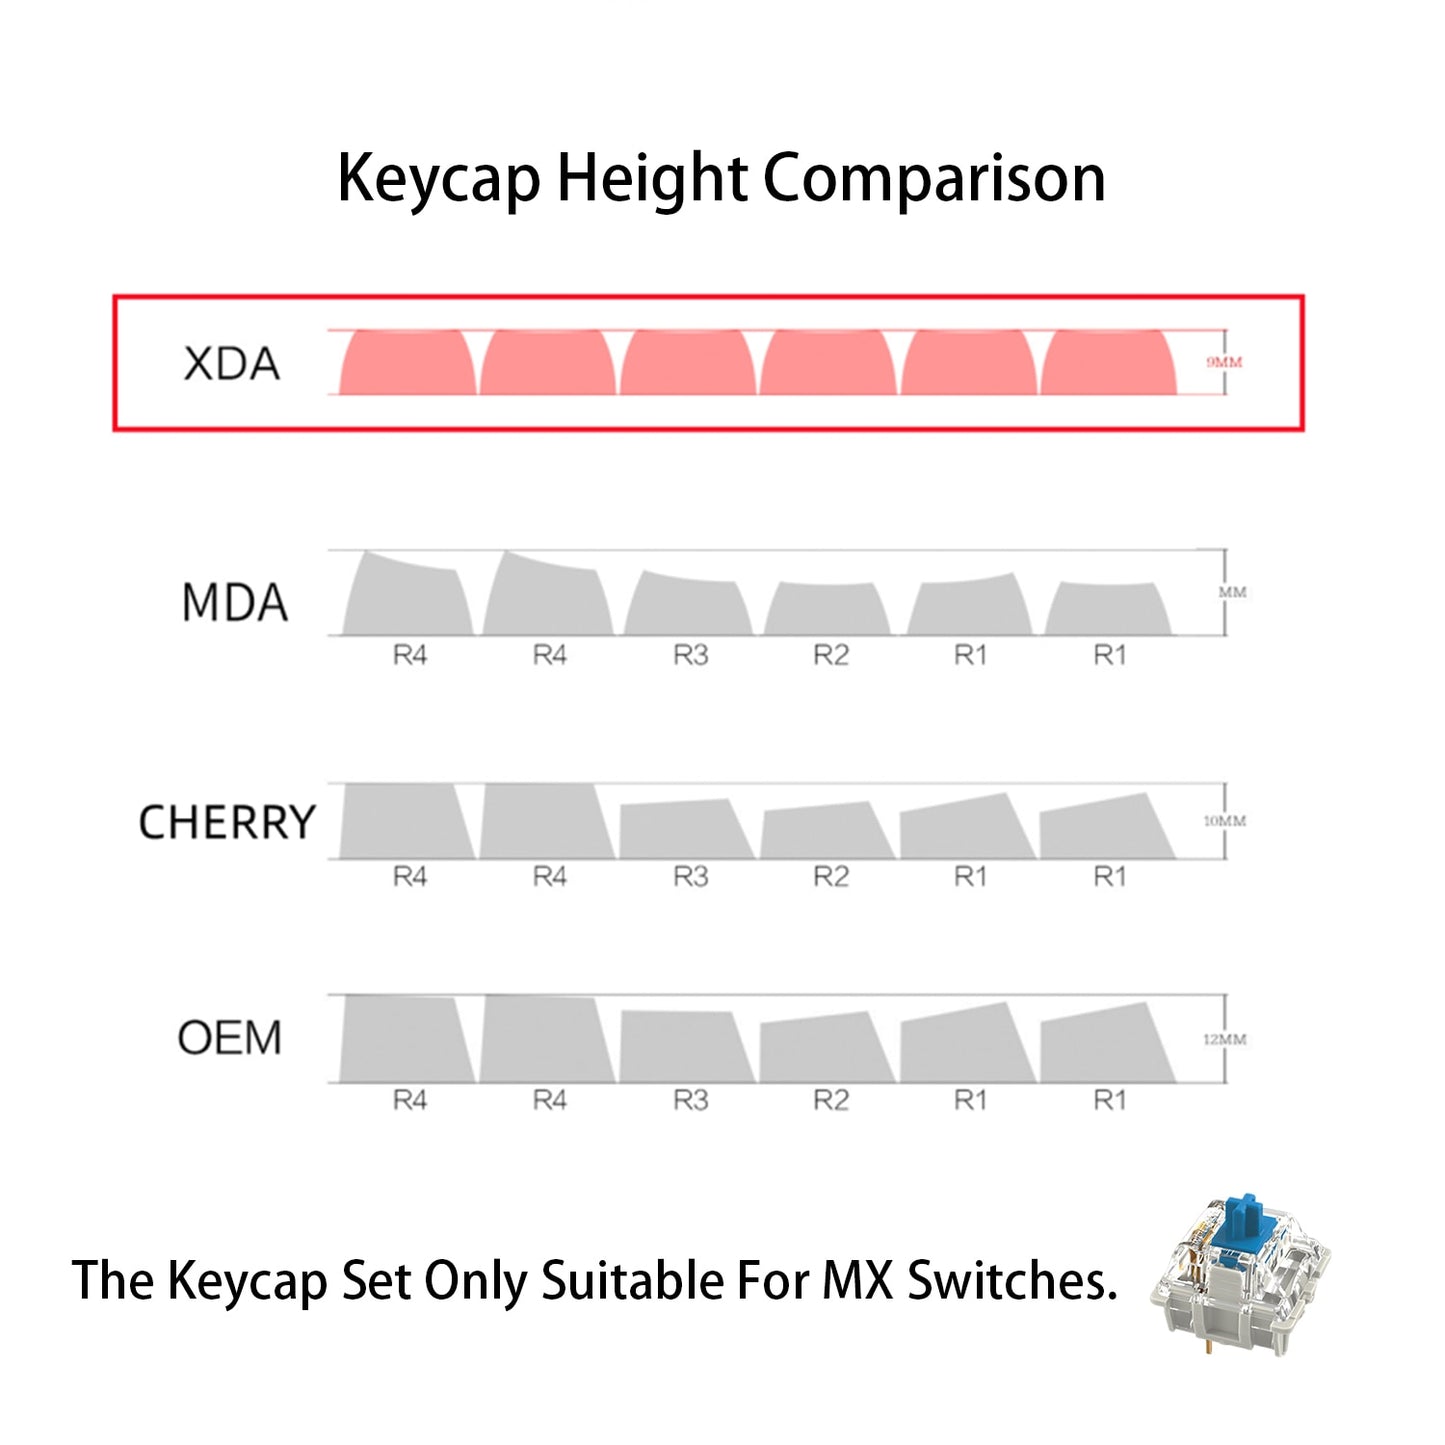 براونيز PBT Keycap XDA Profile Keycaps